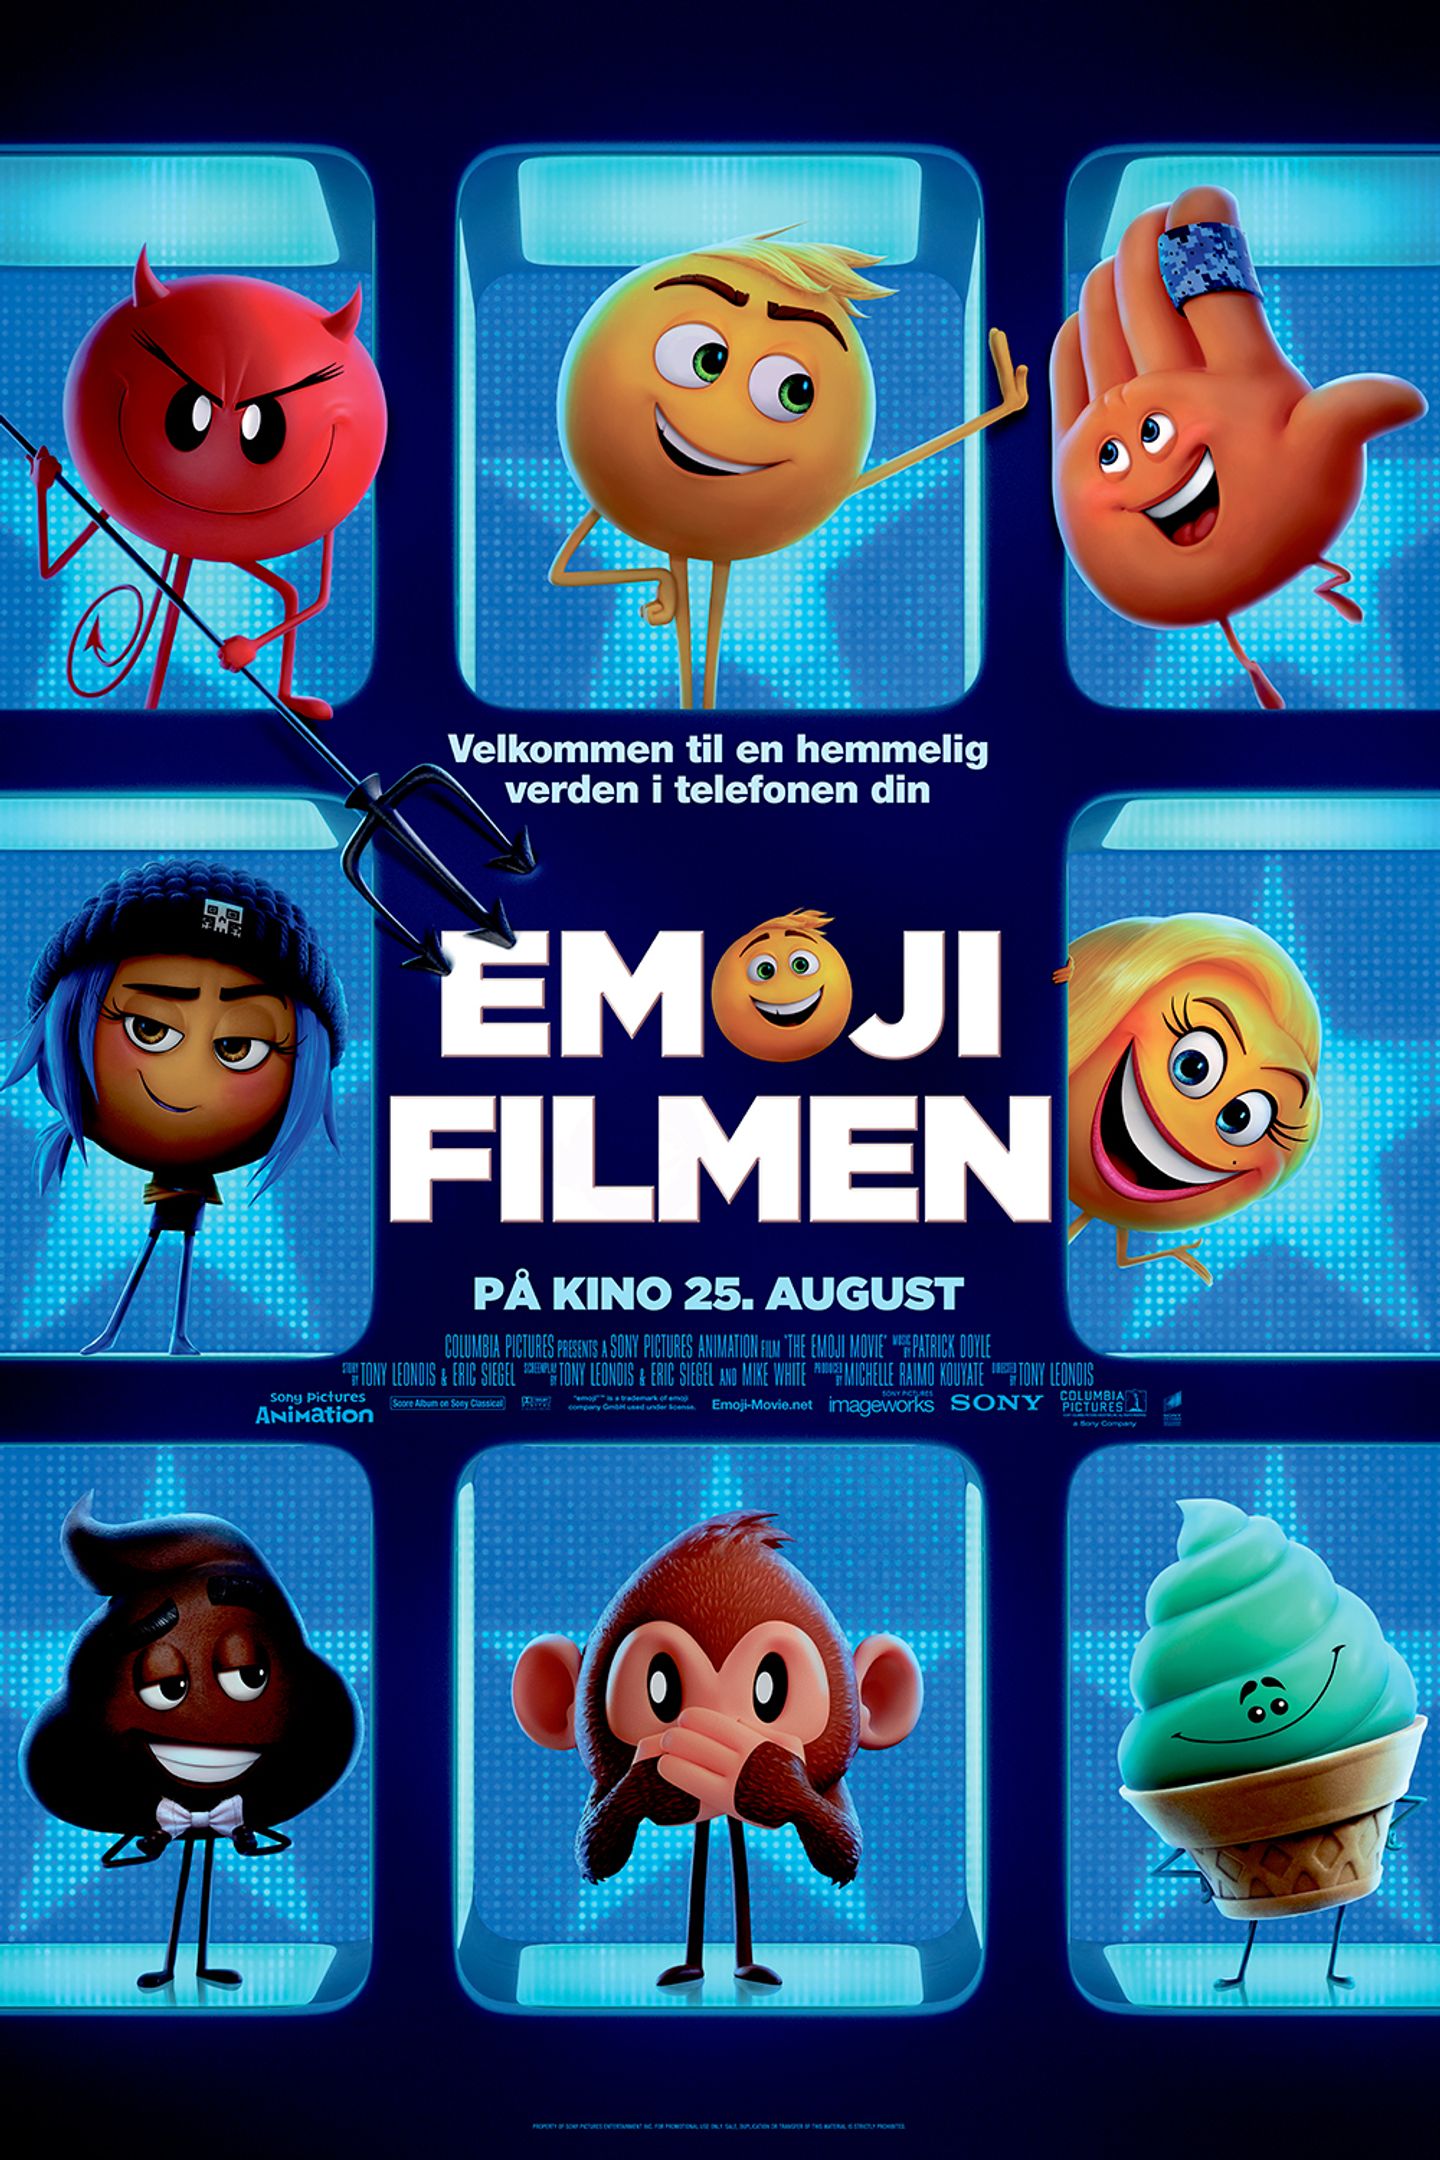 Plakat for 'Emojifilmen (3D, norsk tale)'